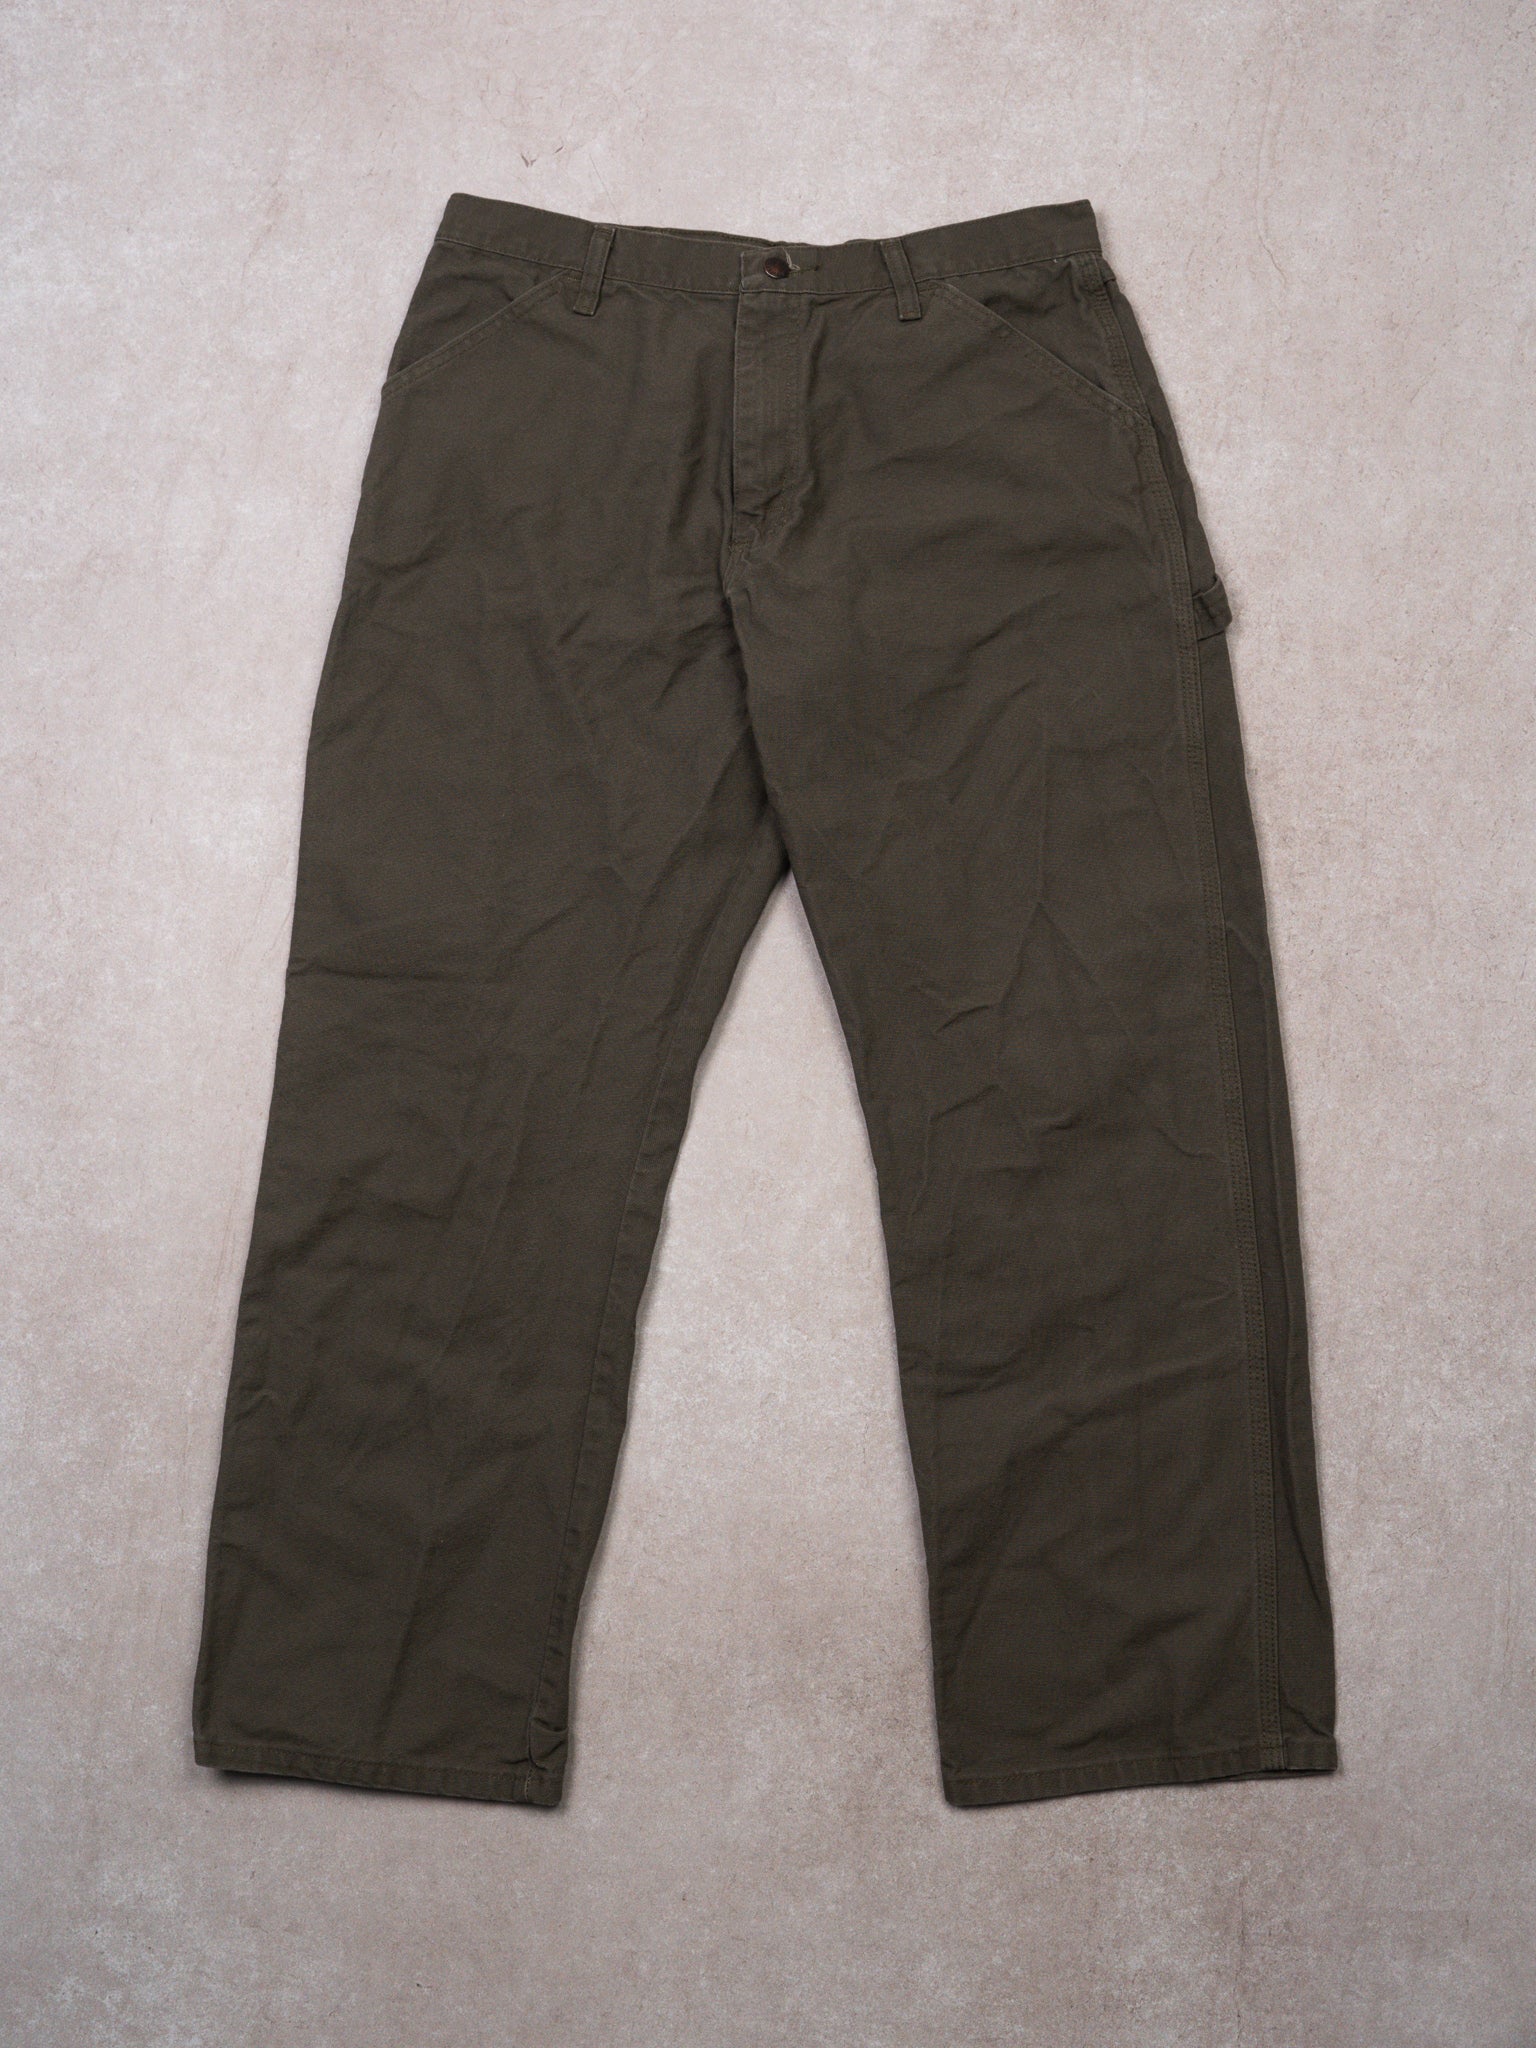 Vintage Clay Rustler Cargo Denim Pants (34 x 28) – Rebalance Vintage